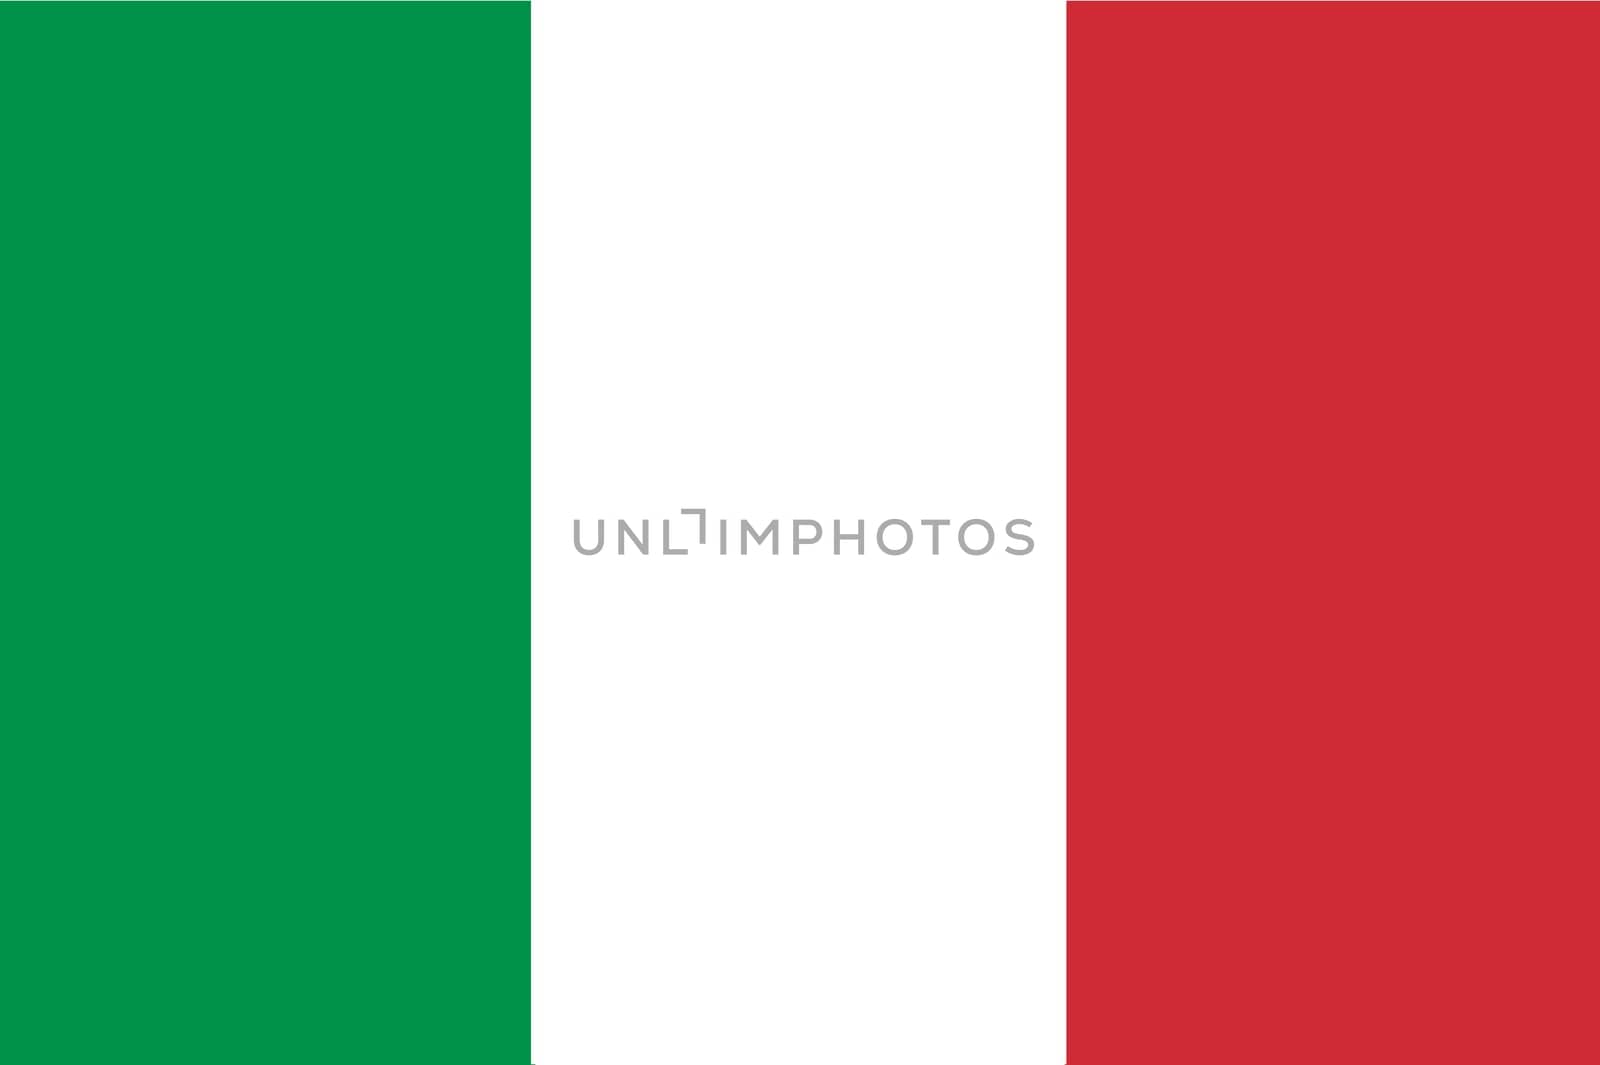 Italian flag and language icon - isolated vector illustration